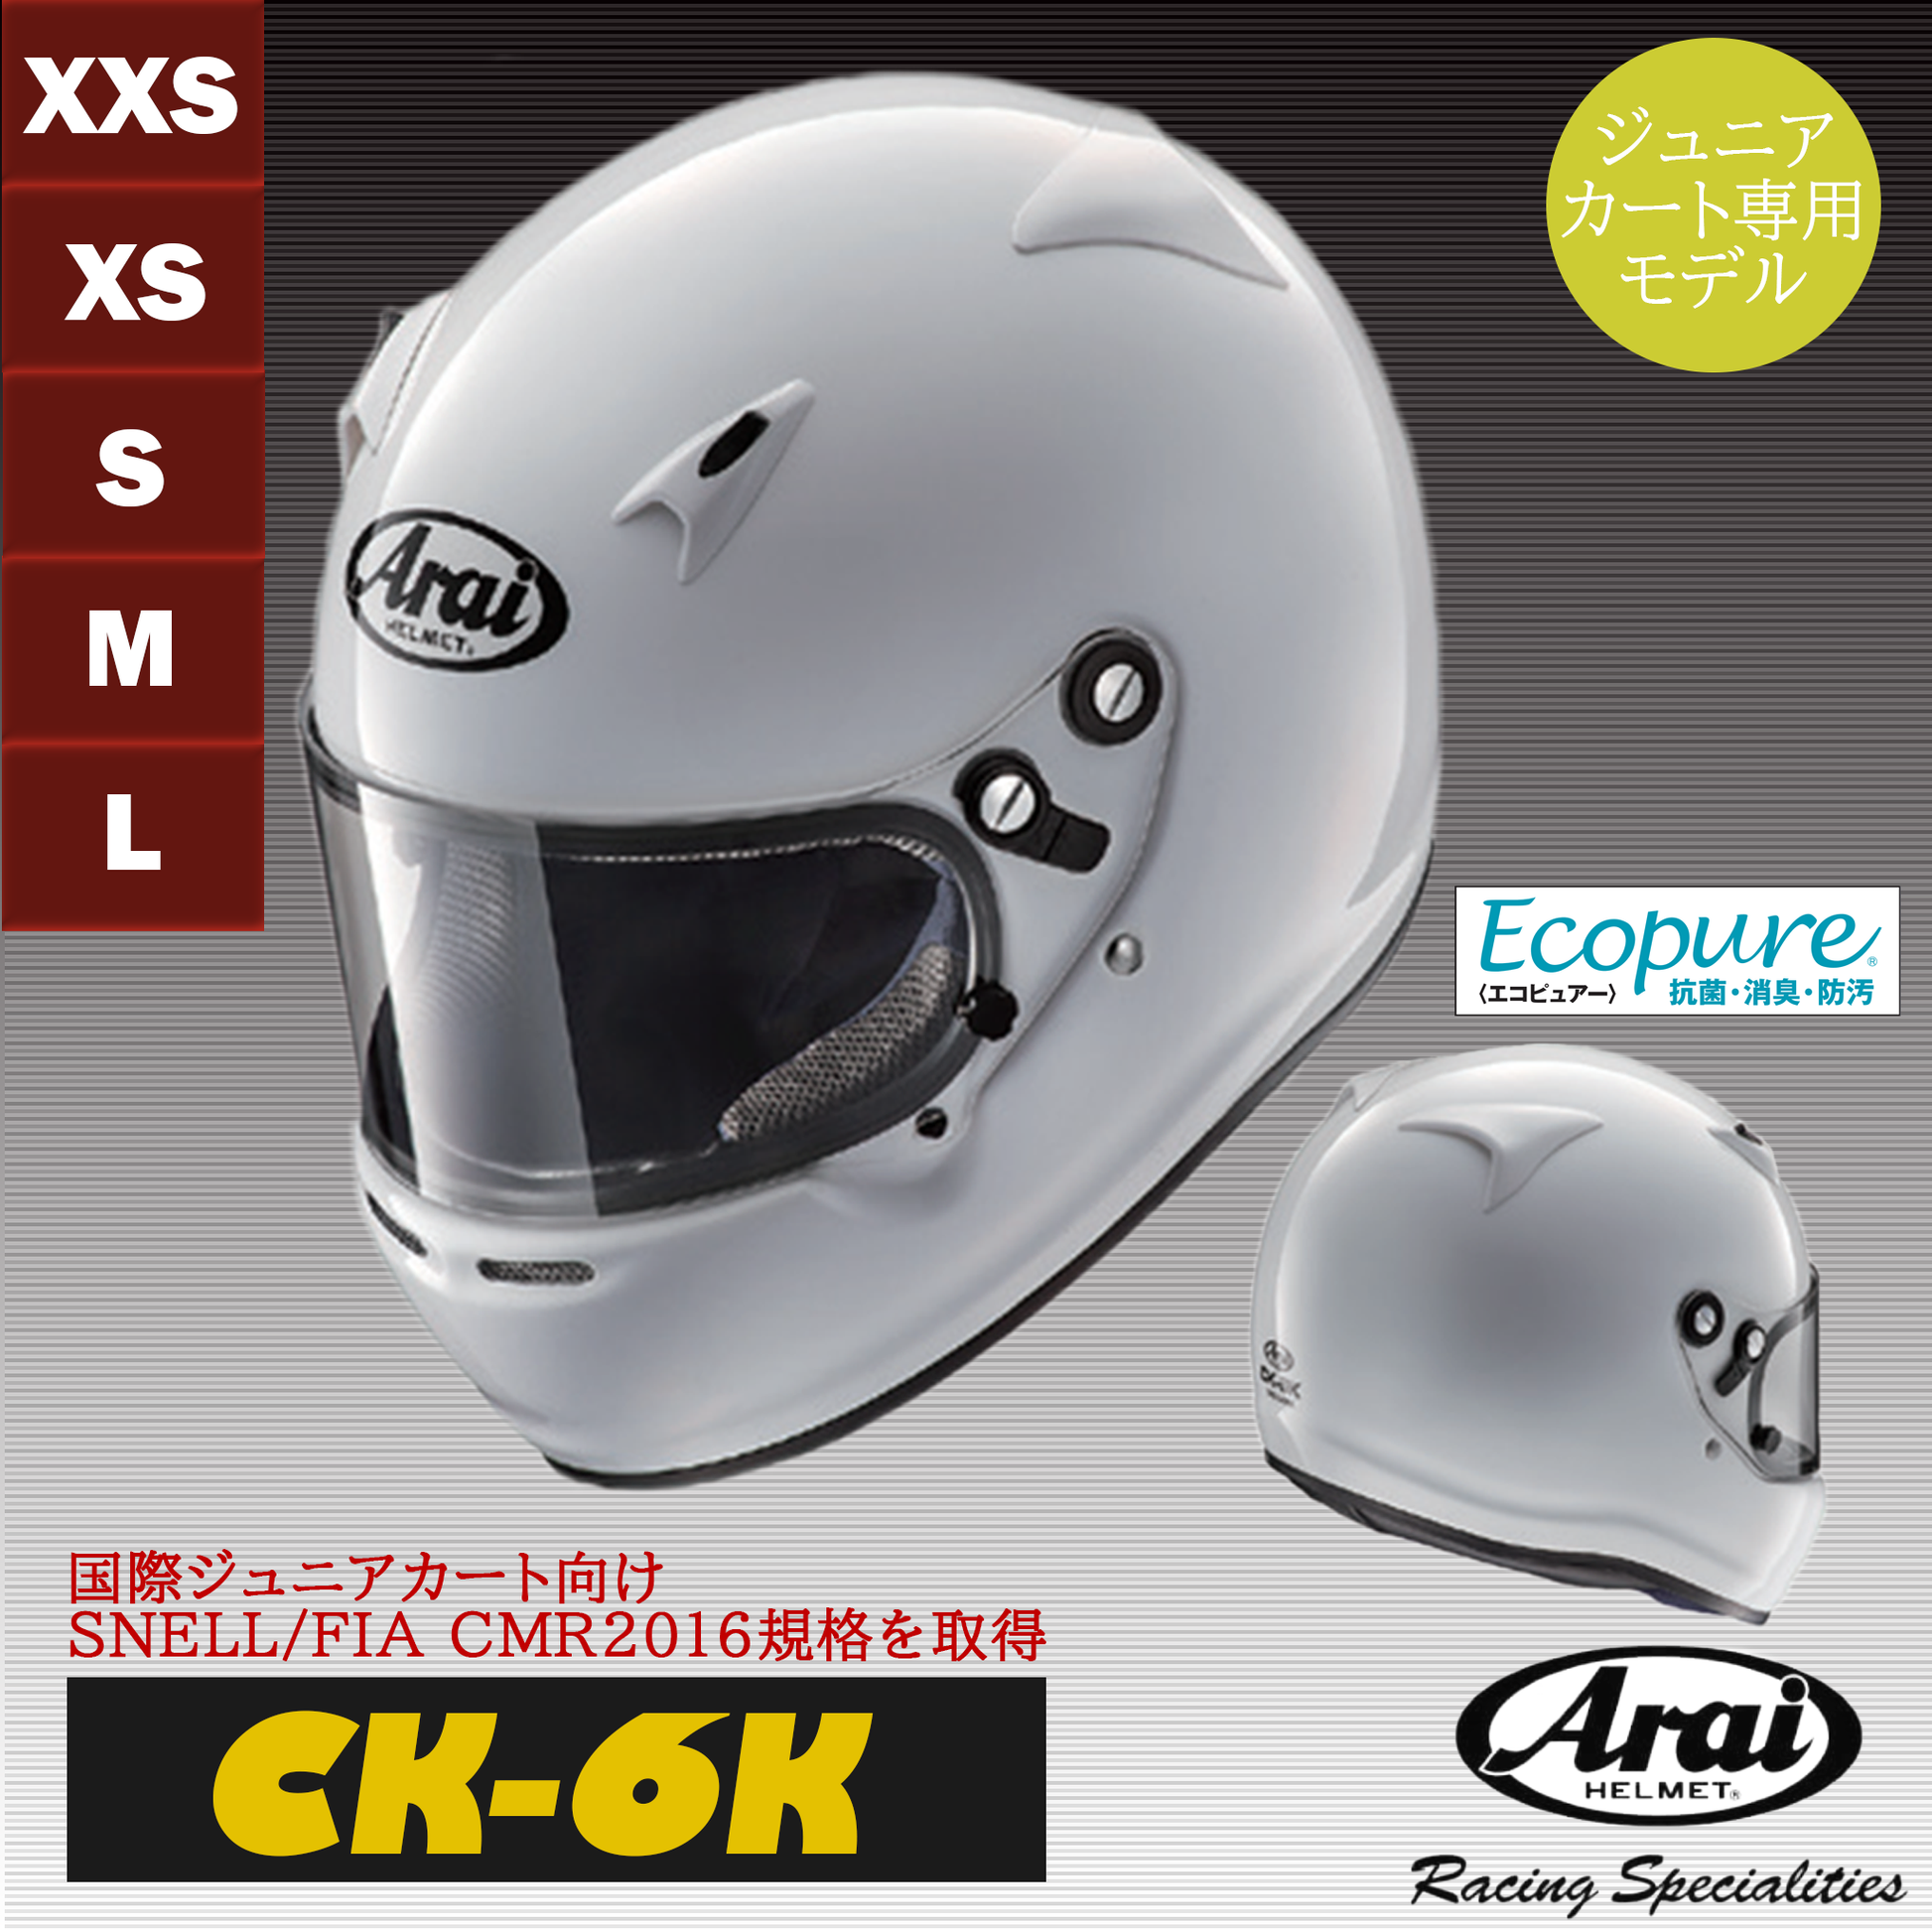 CK-6K] ジュニアカート専用ヘルメット Arai – KBF SHOP